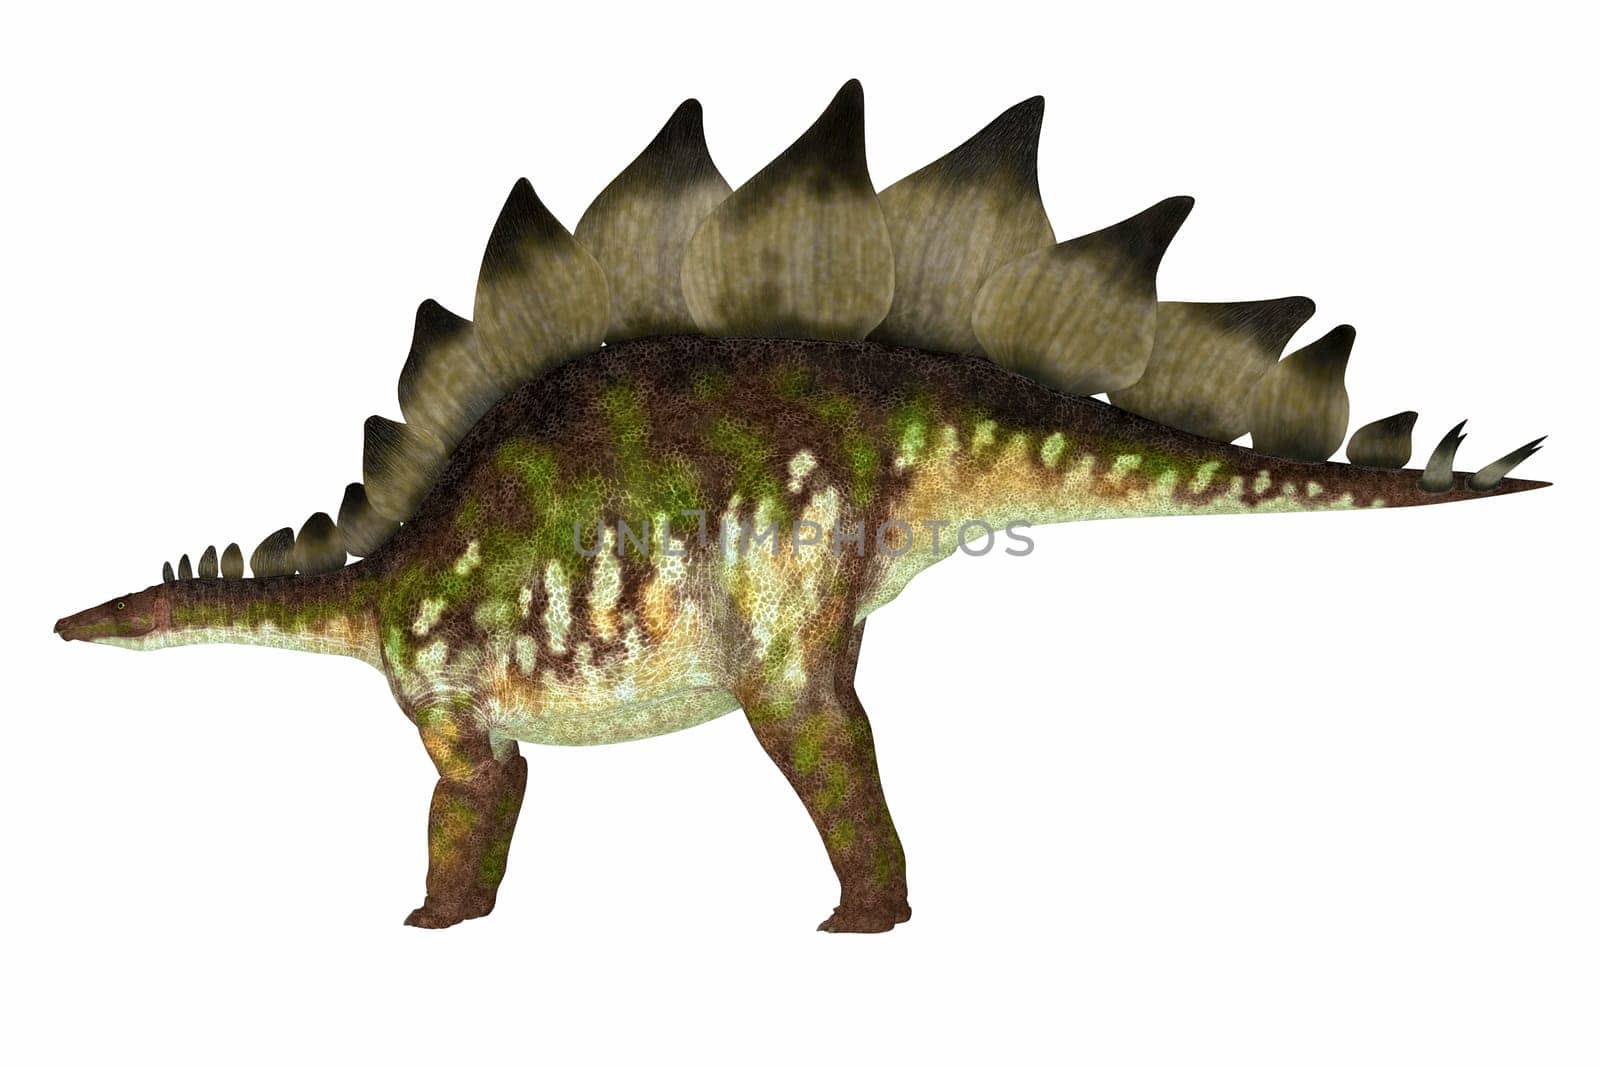 Stegosaurus Dinosaur Side View by Catmando